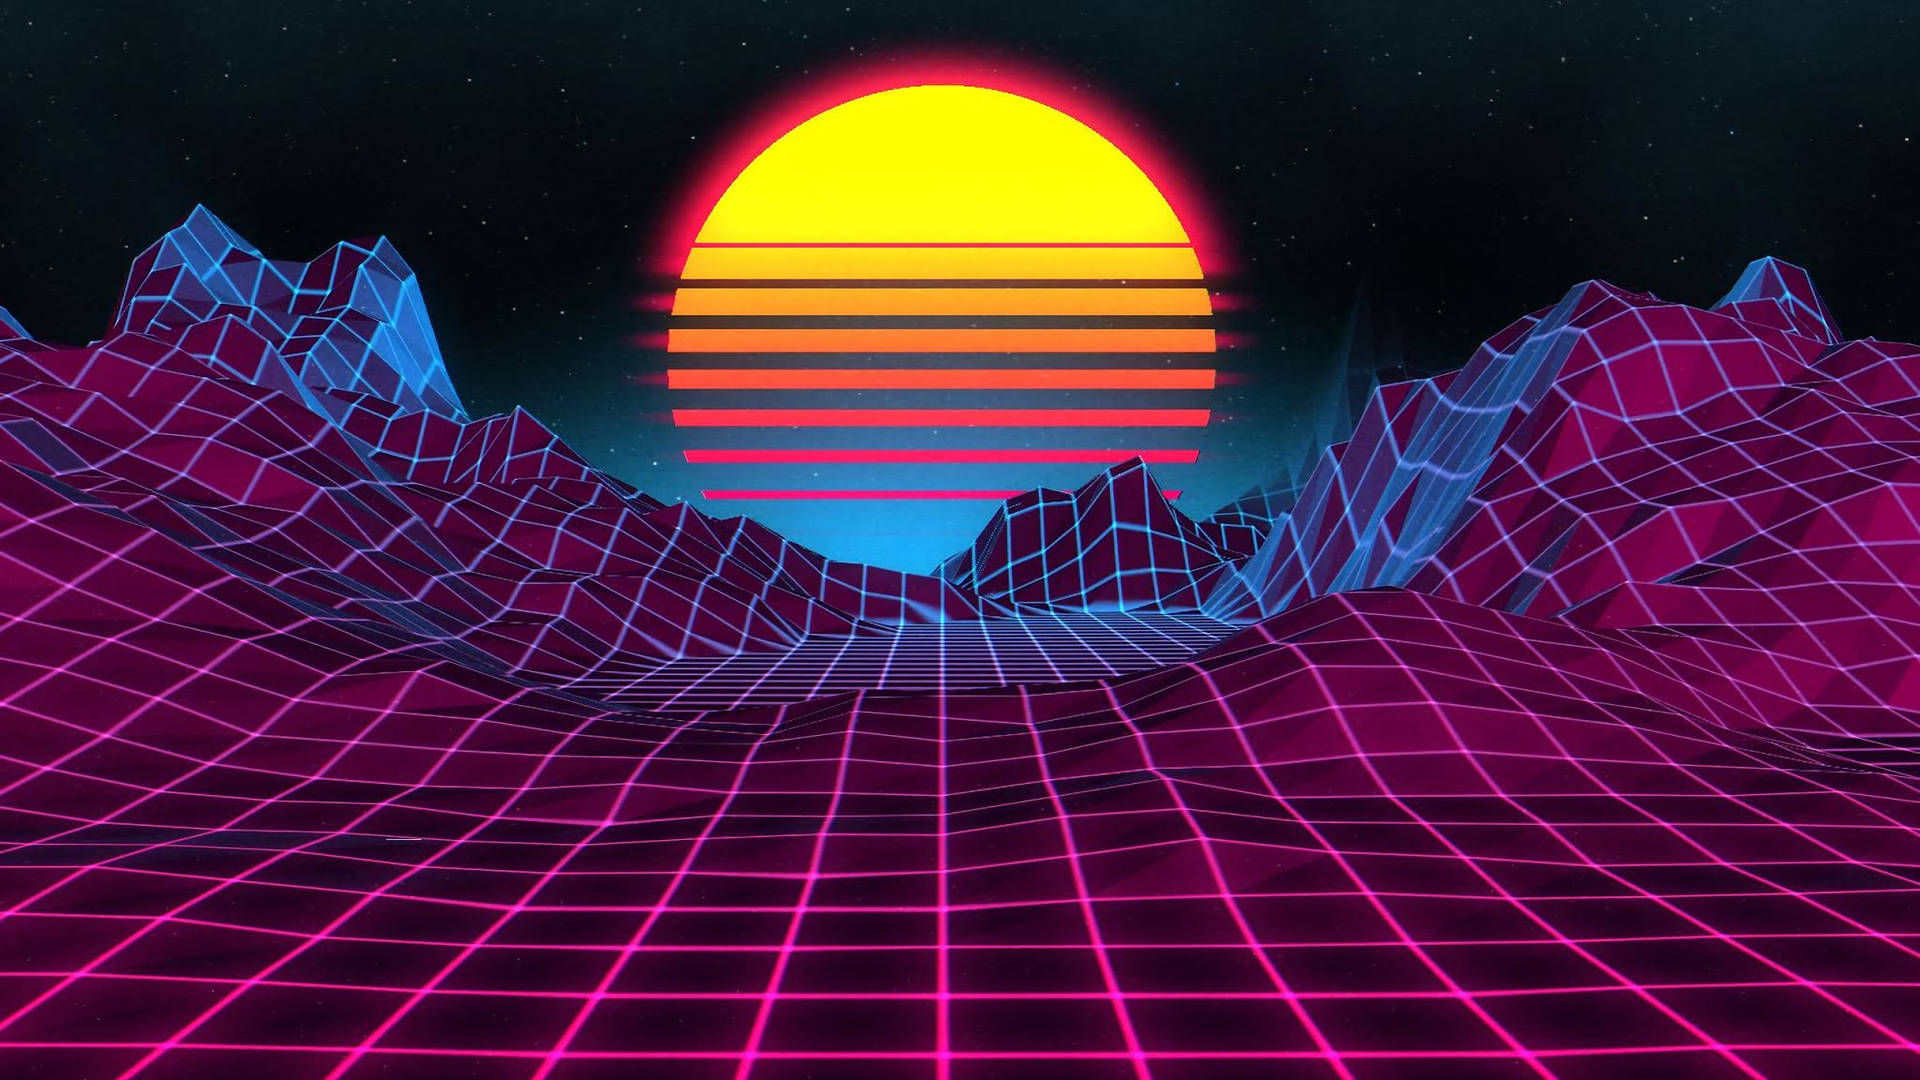 Retro Vapor Wave Digital Art Background